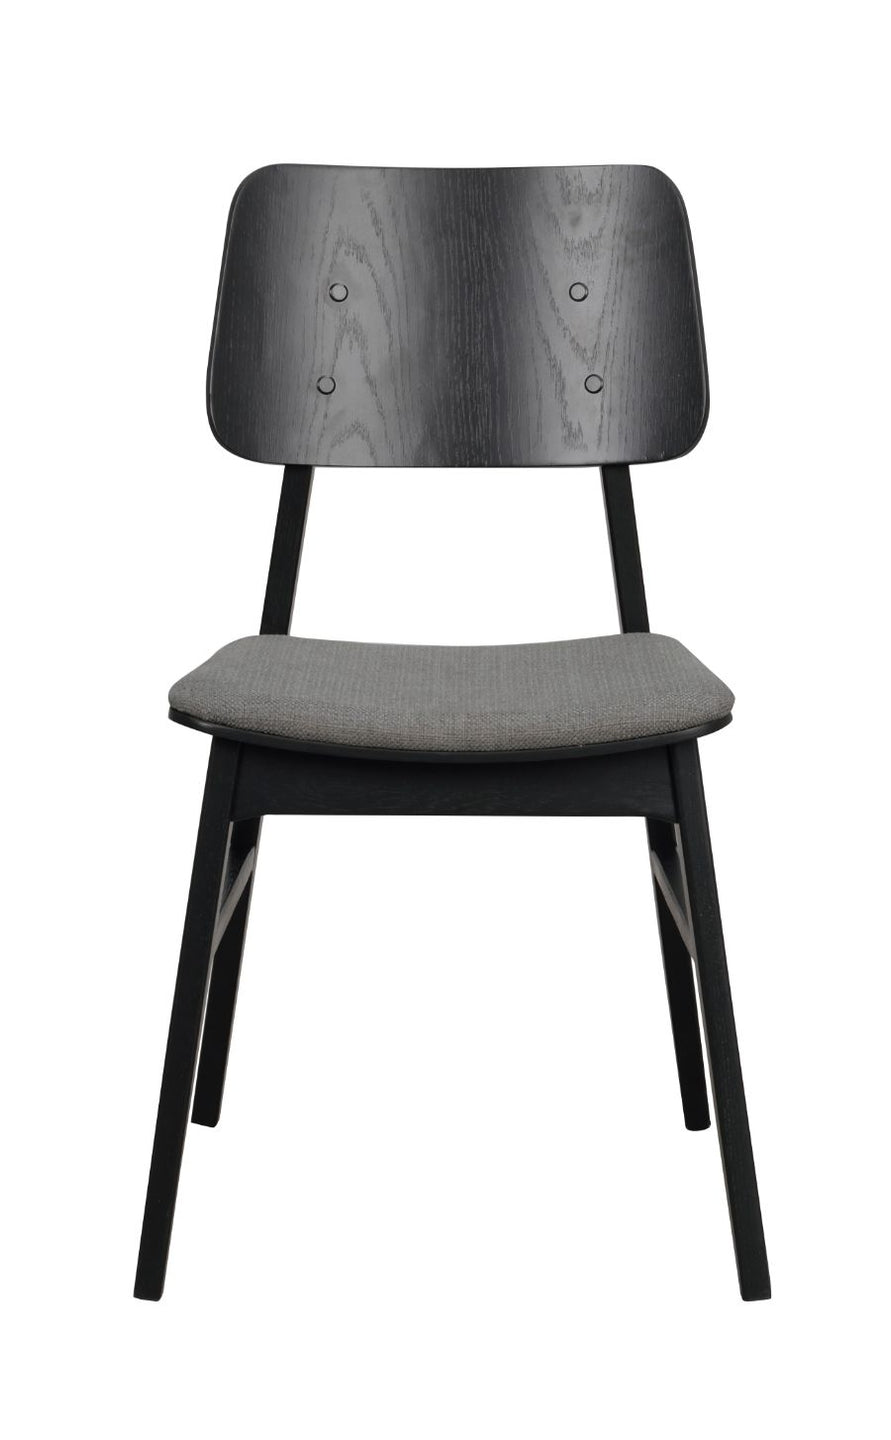 NAGANO Set of 2 Chairs - D40Studio